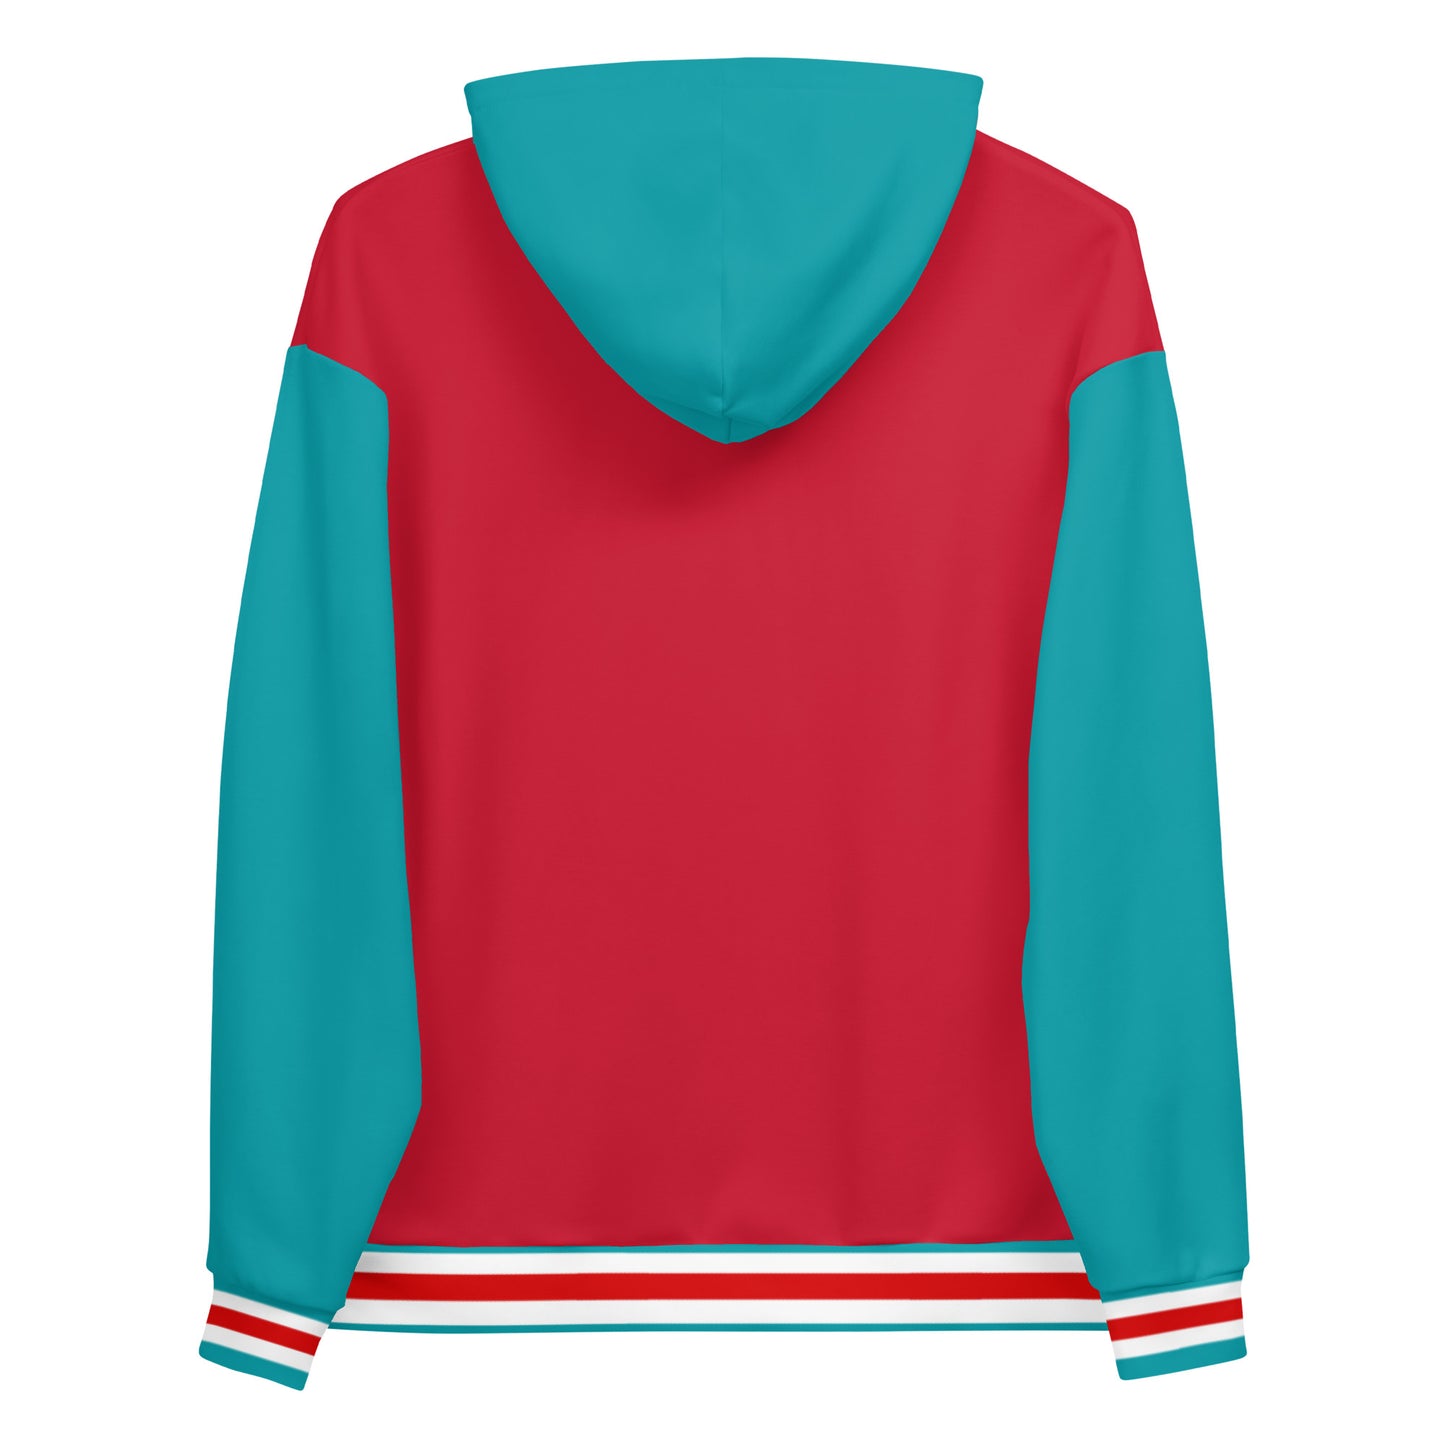 SVOLTA Unisex Color Block Varsity Stripe Hoodie in Red & Teal, XS-XL - Teen to Adult